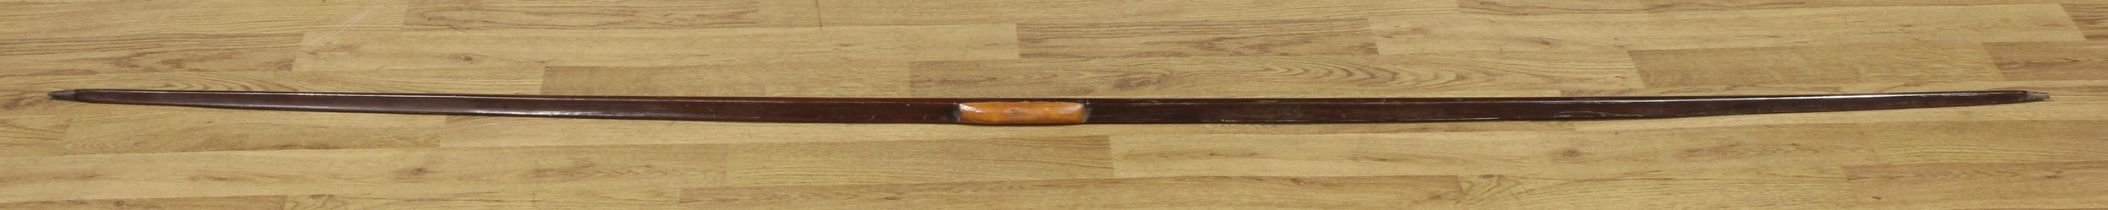 Archery - a hardwood longbow, 179.5cm long